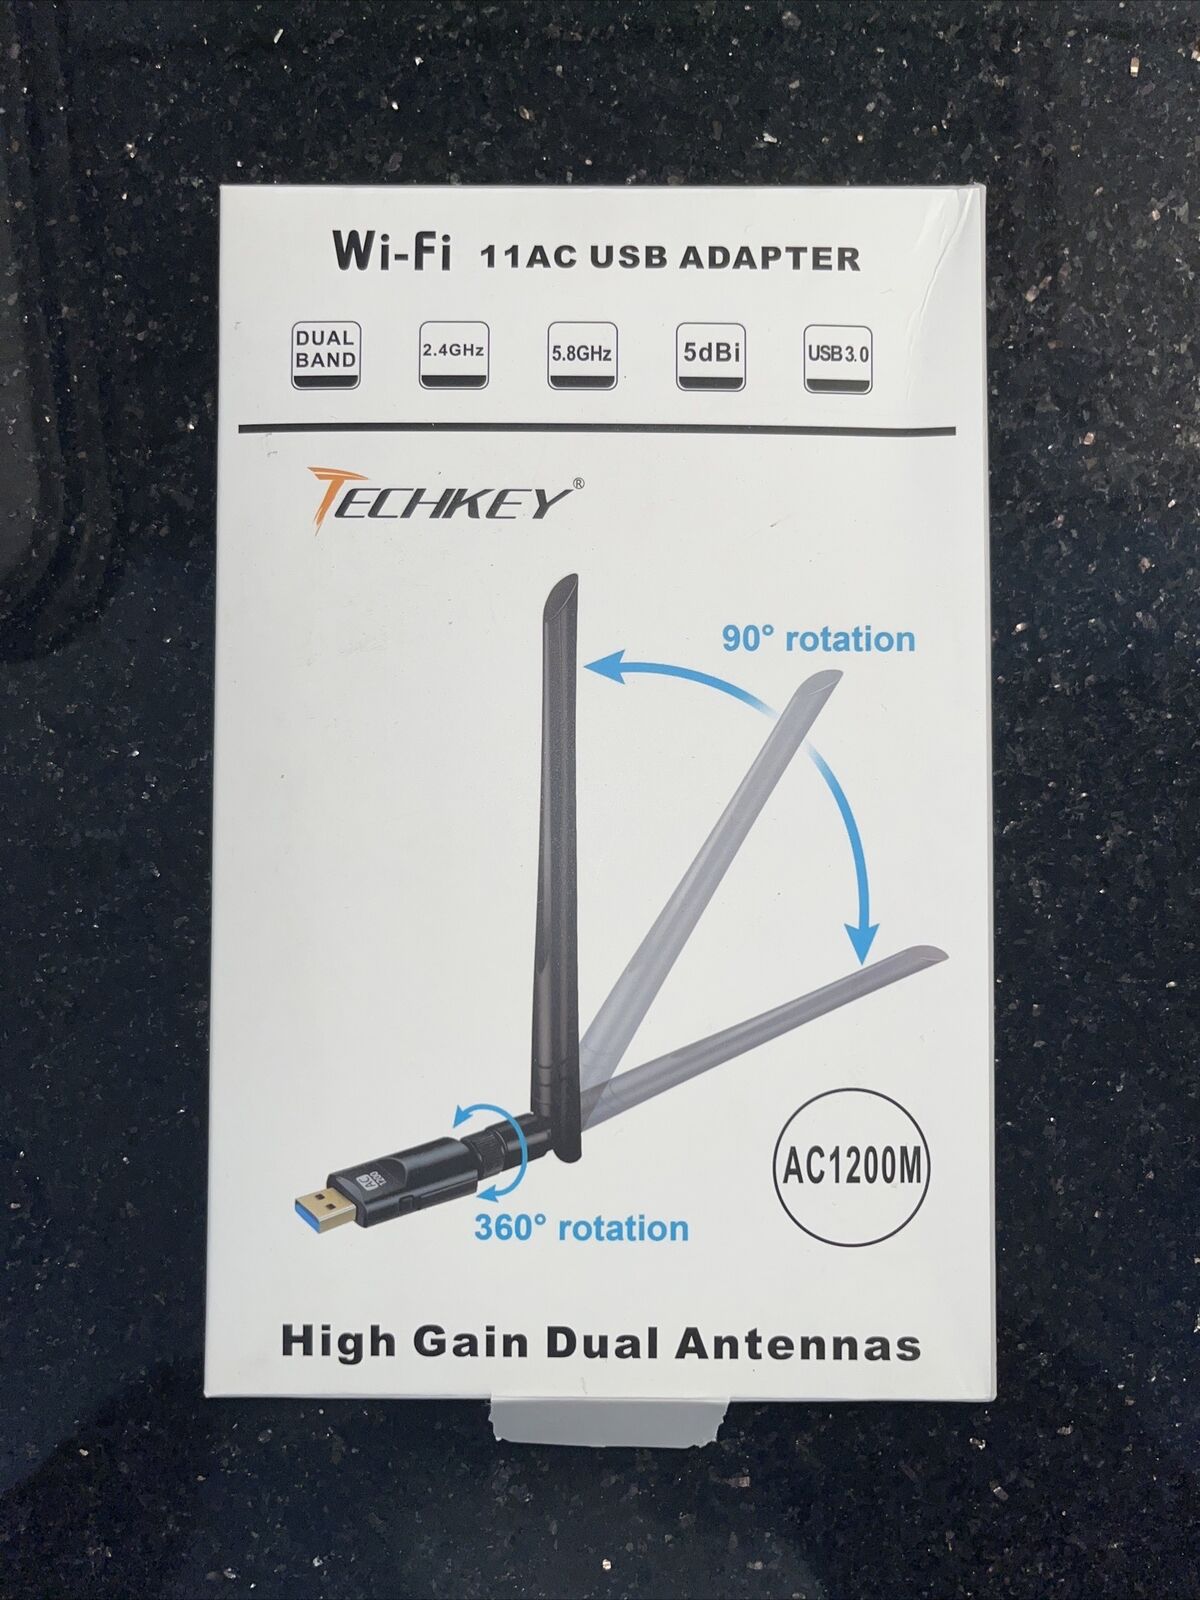 Wifi 11 Ac USB Adapter High Gain dual Antennas.